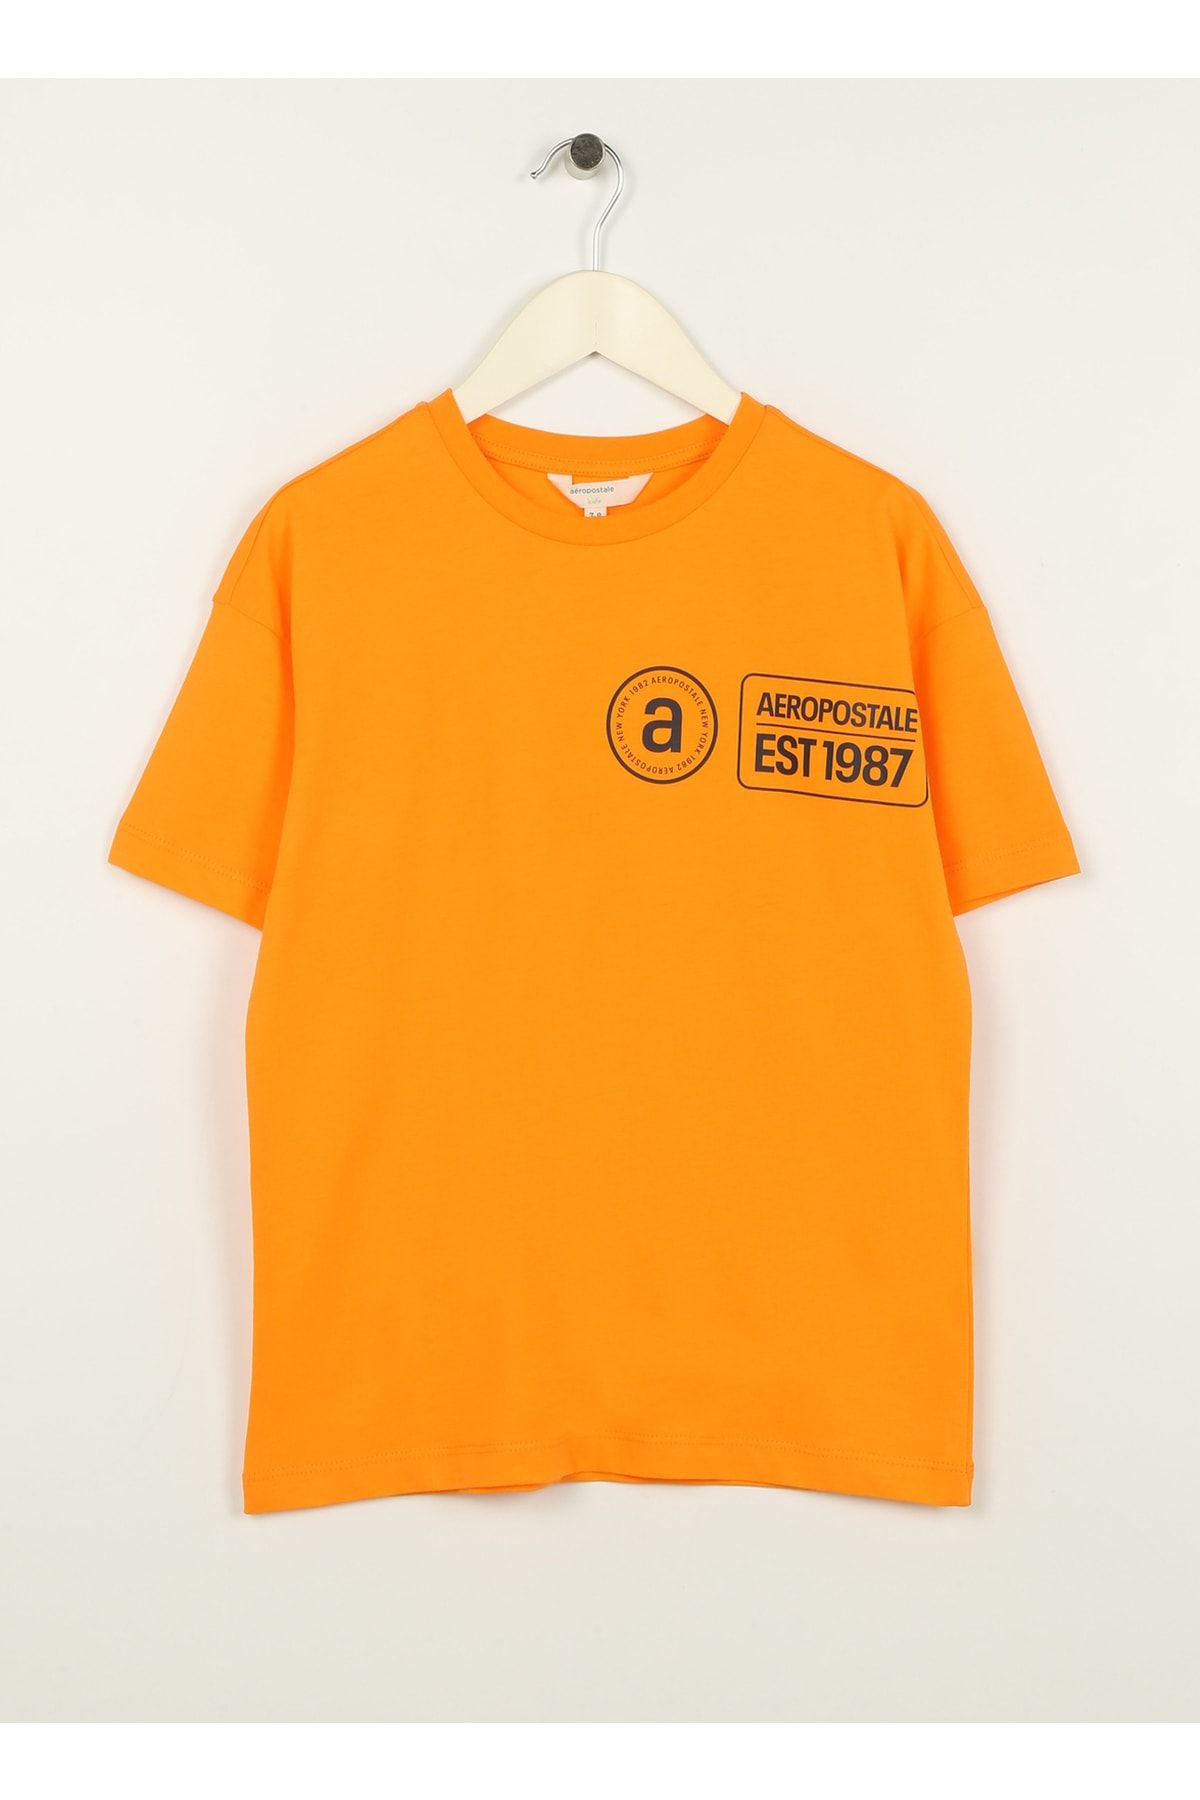 Aeropostale Baskılı Turuncu Erkek Çocuk T-shirt 23sab-48